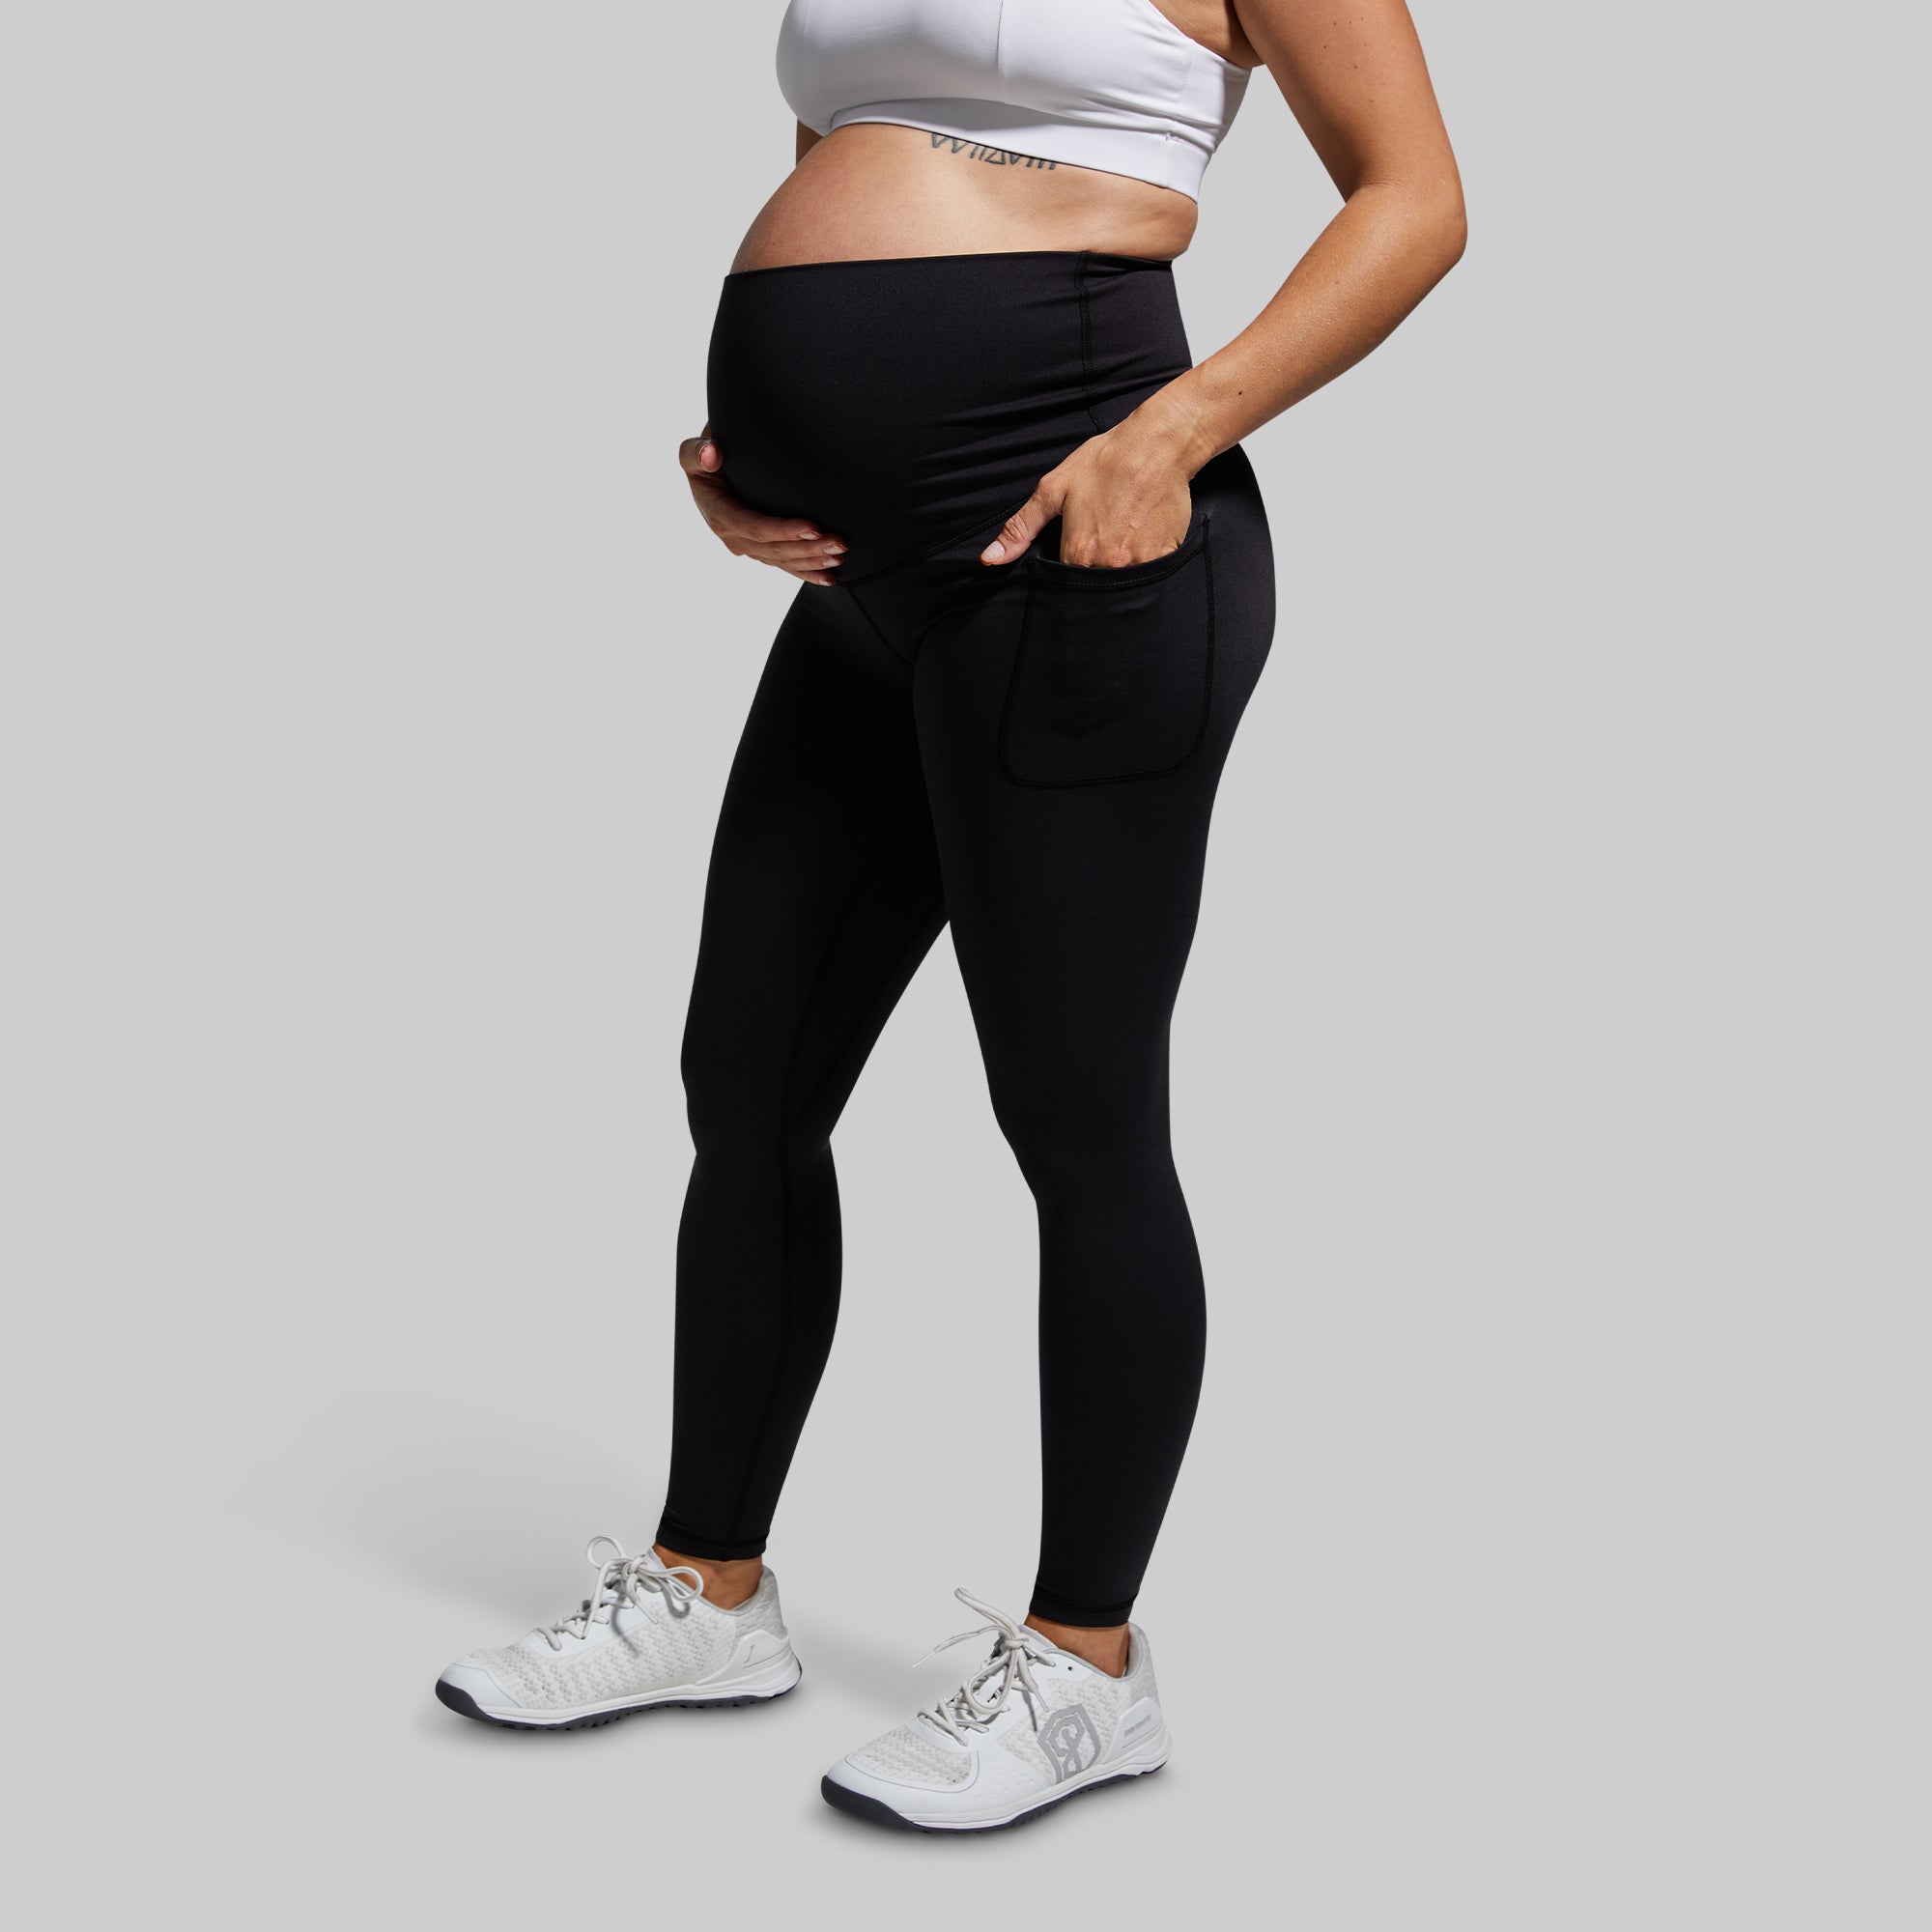 Momyknows Black Pockets High Rise Stretch Pregnant Legging Sports